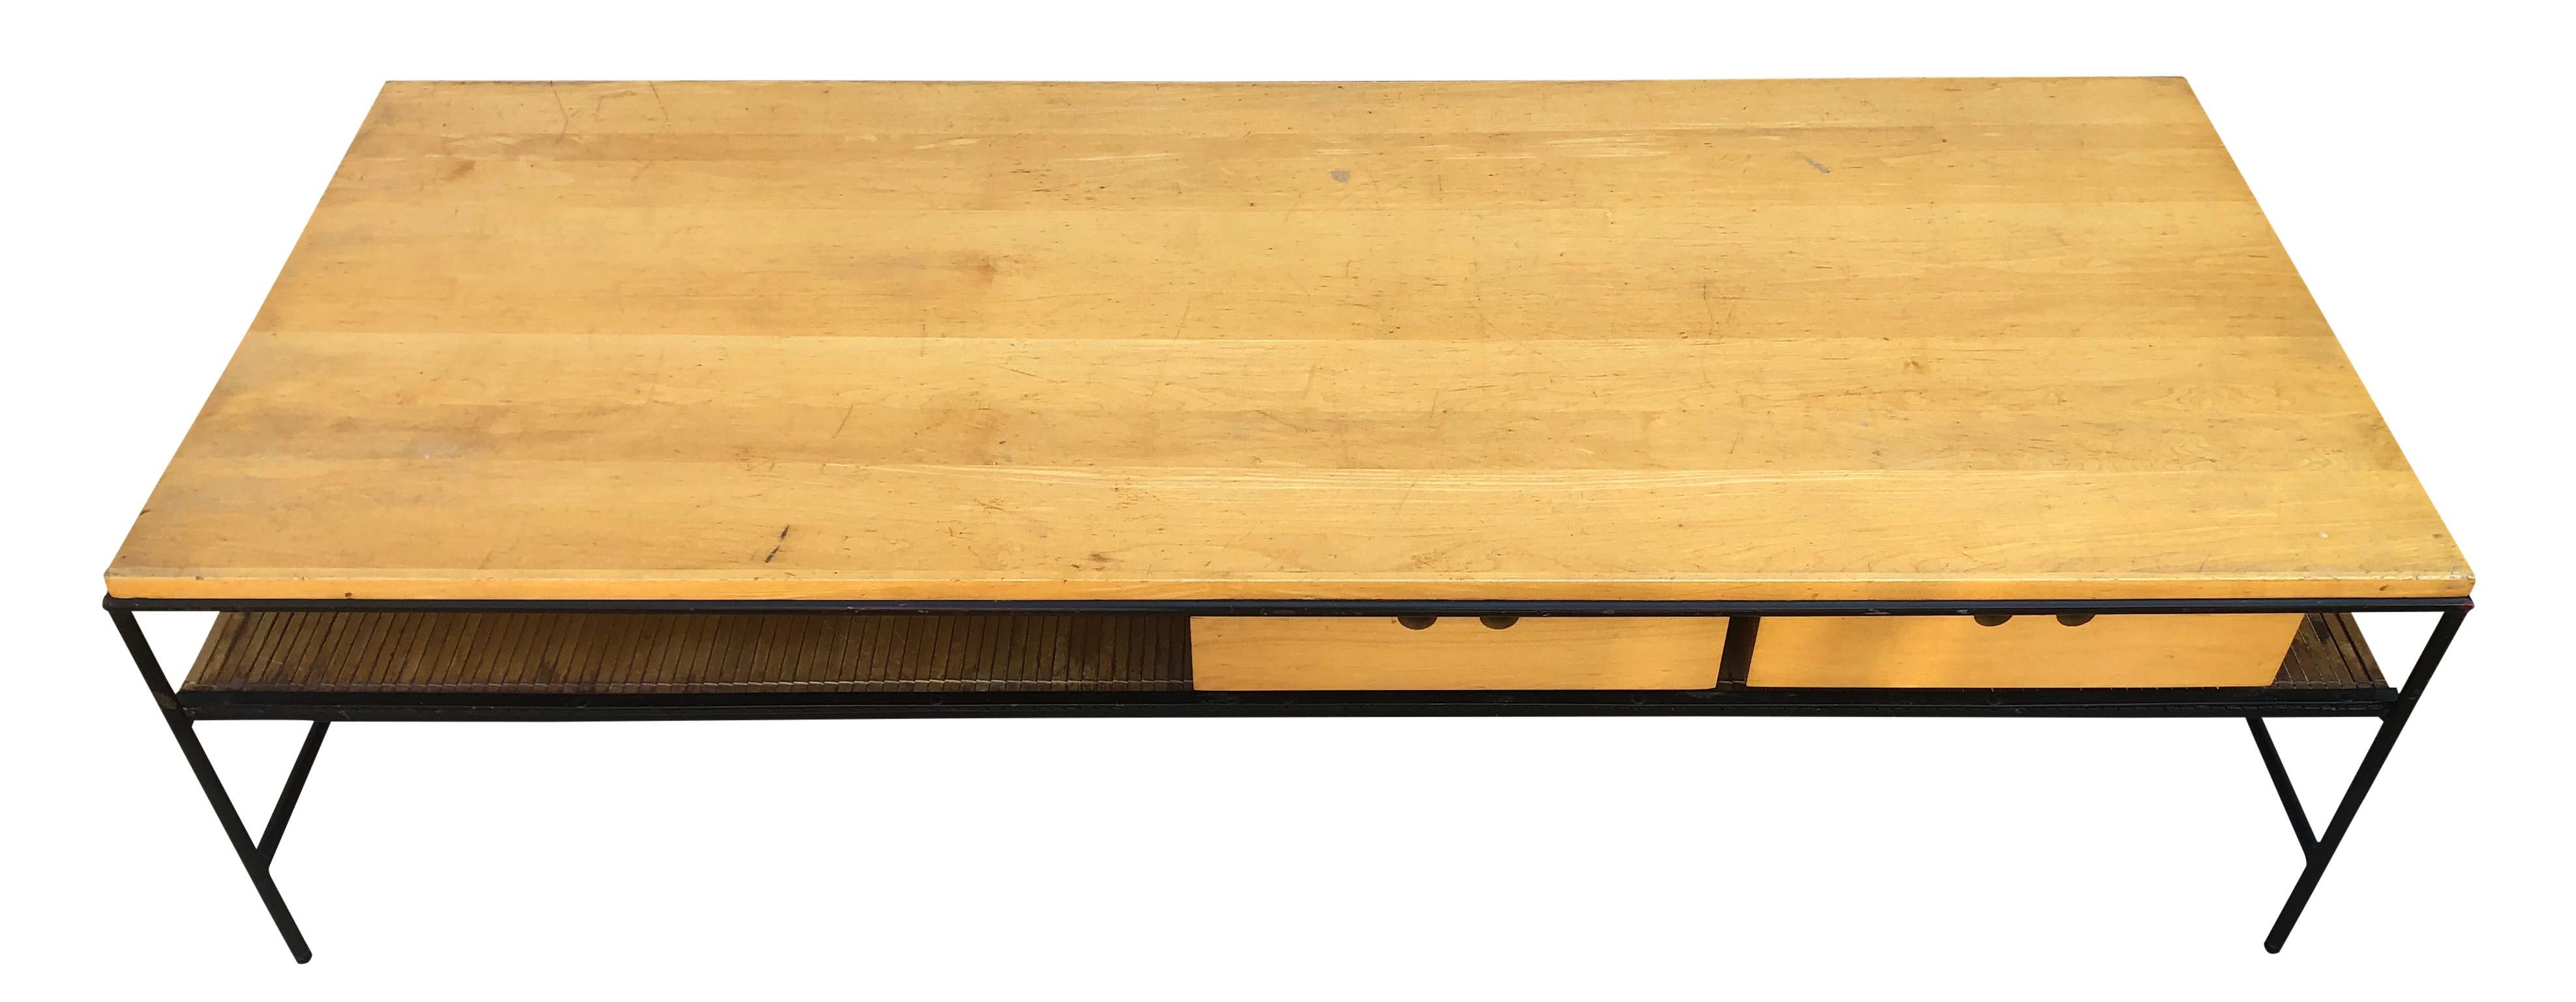 Mid-Century Modern Midcentury Paul McCobb #1584 Coffee Table Bench Blonde Maple Iron 2-drawer